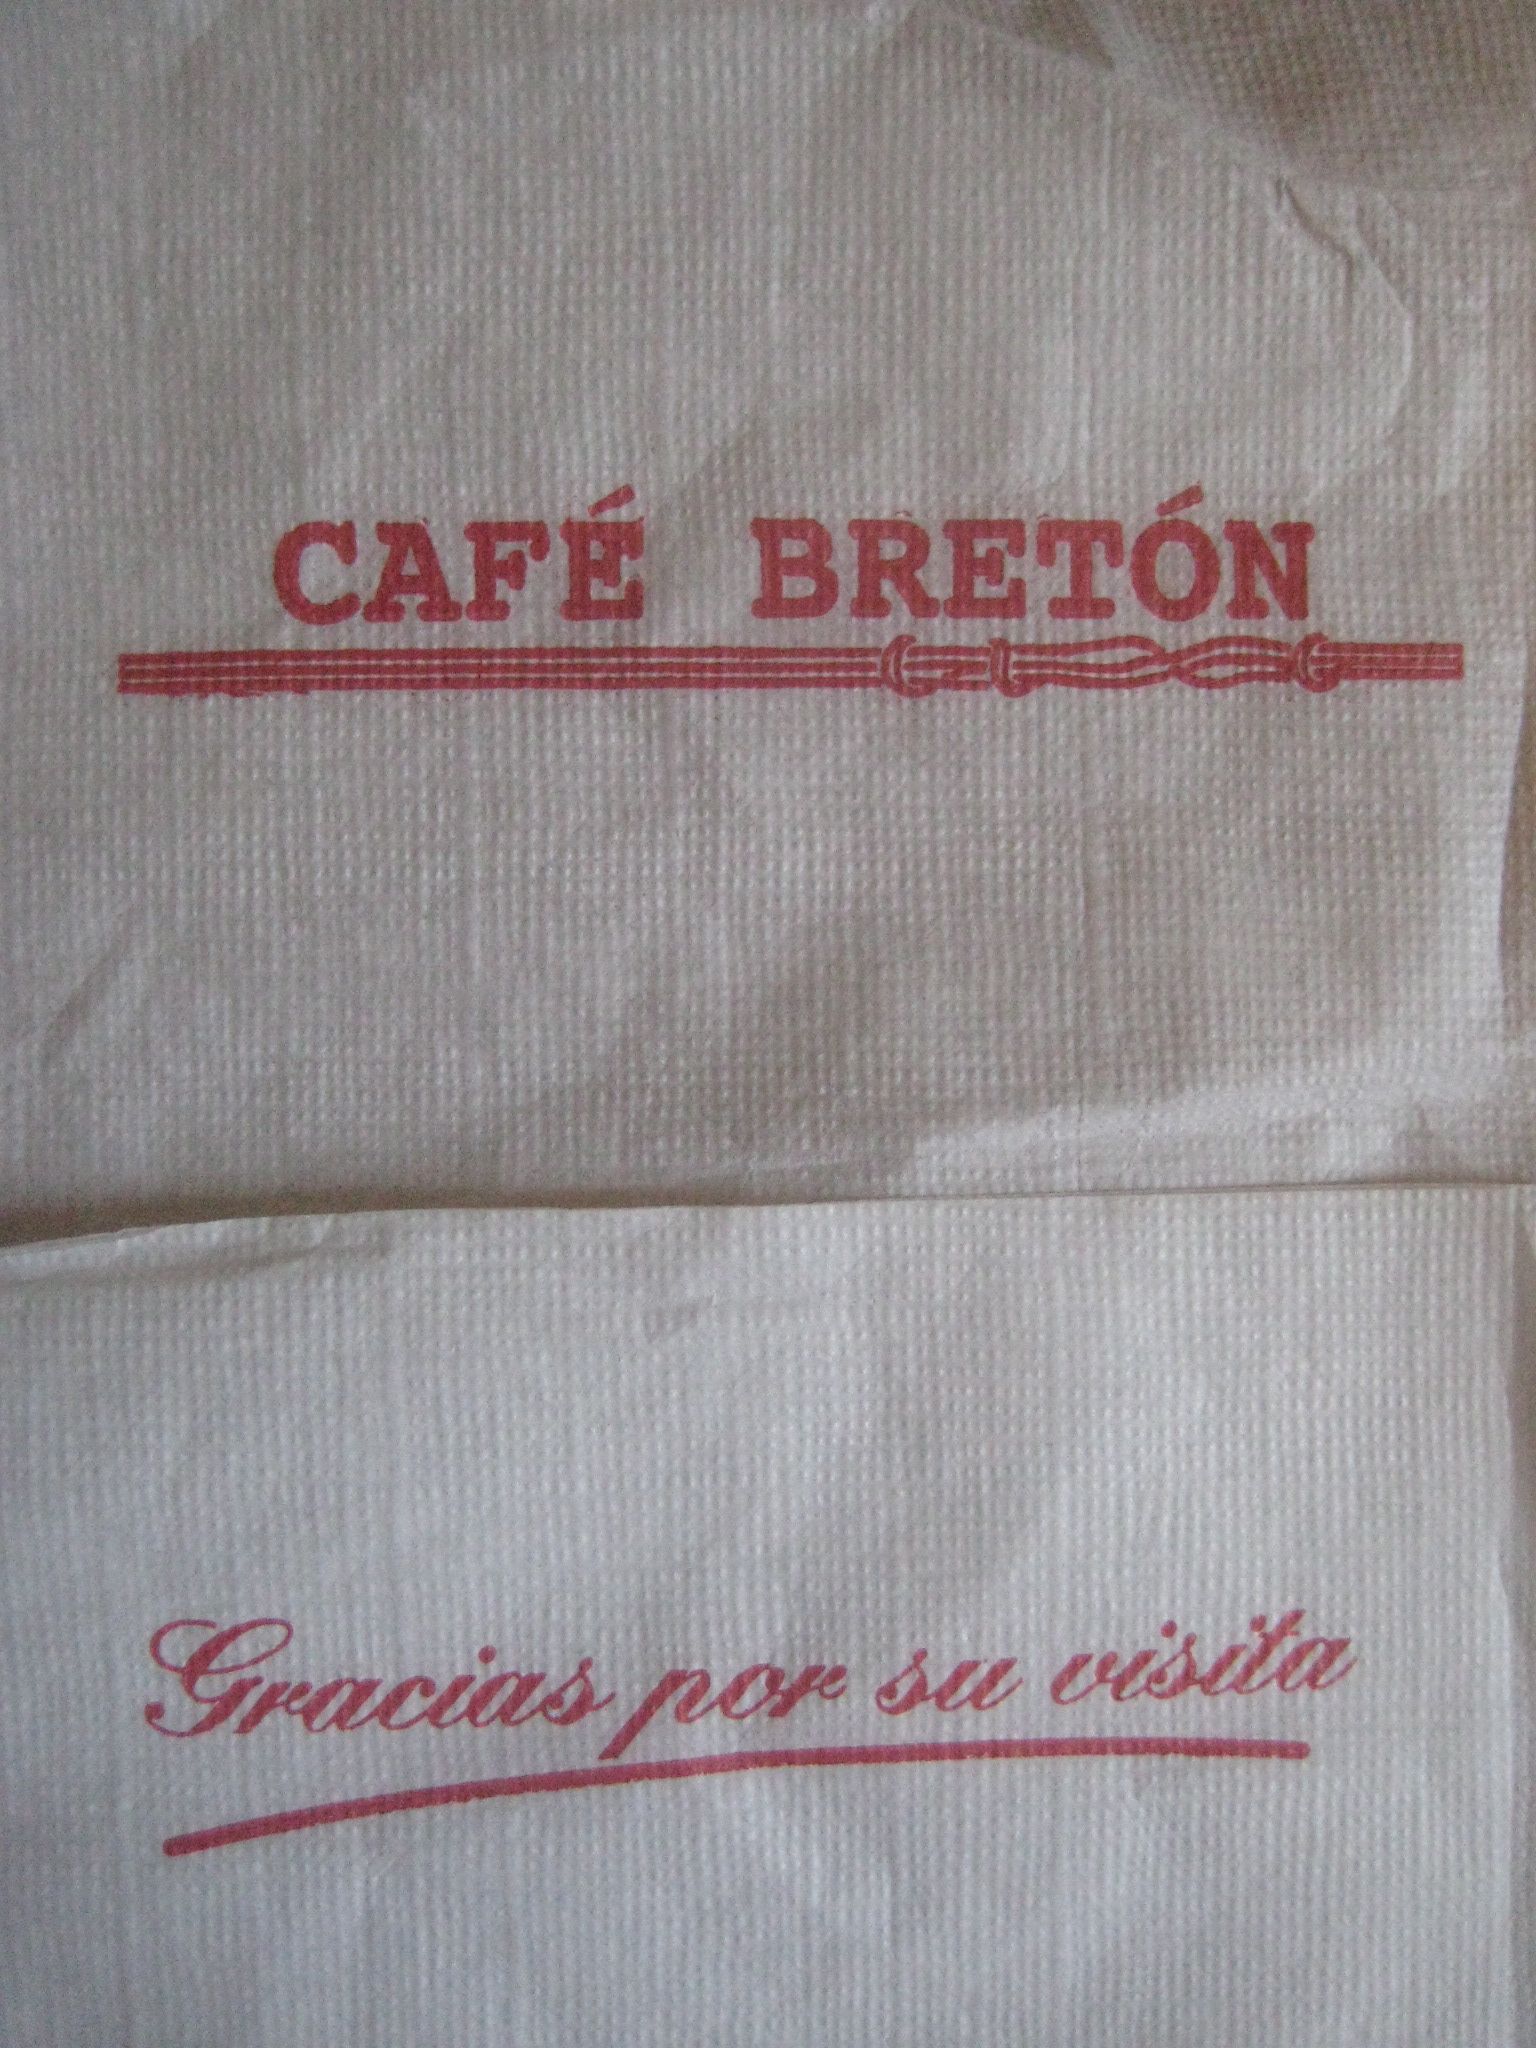 cafe Breton